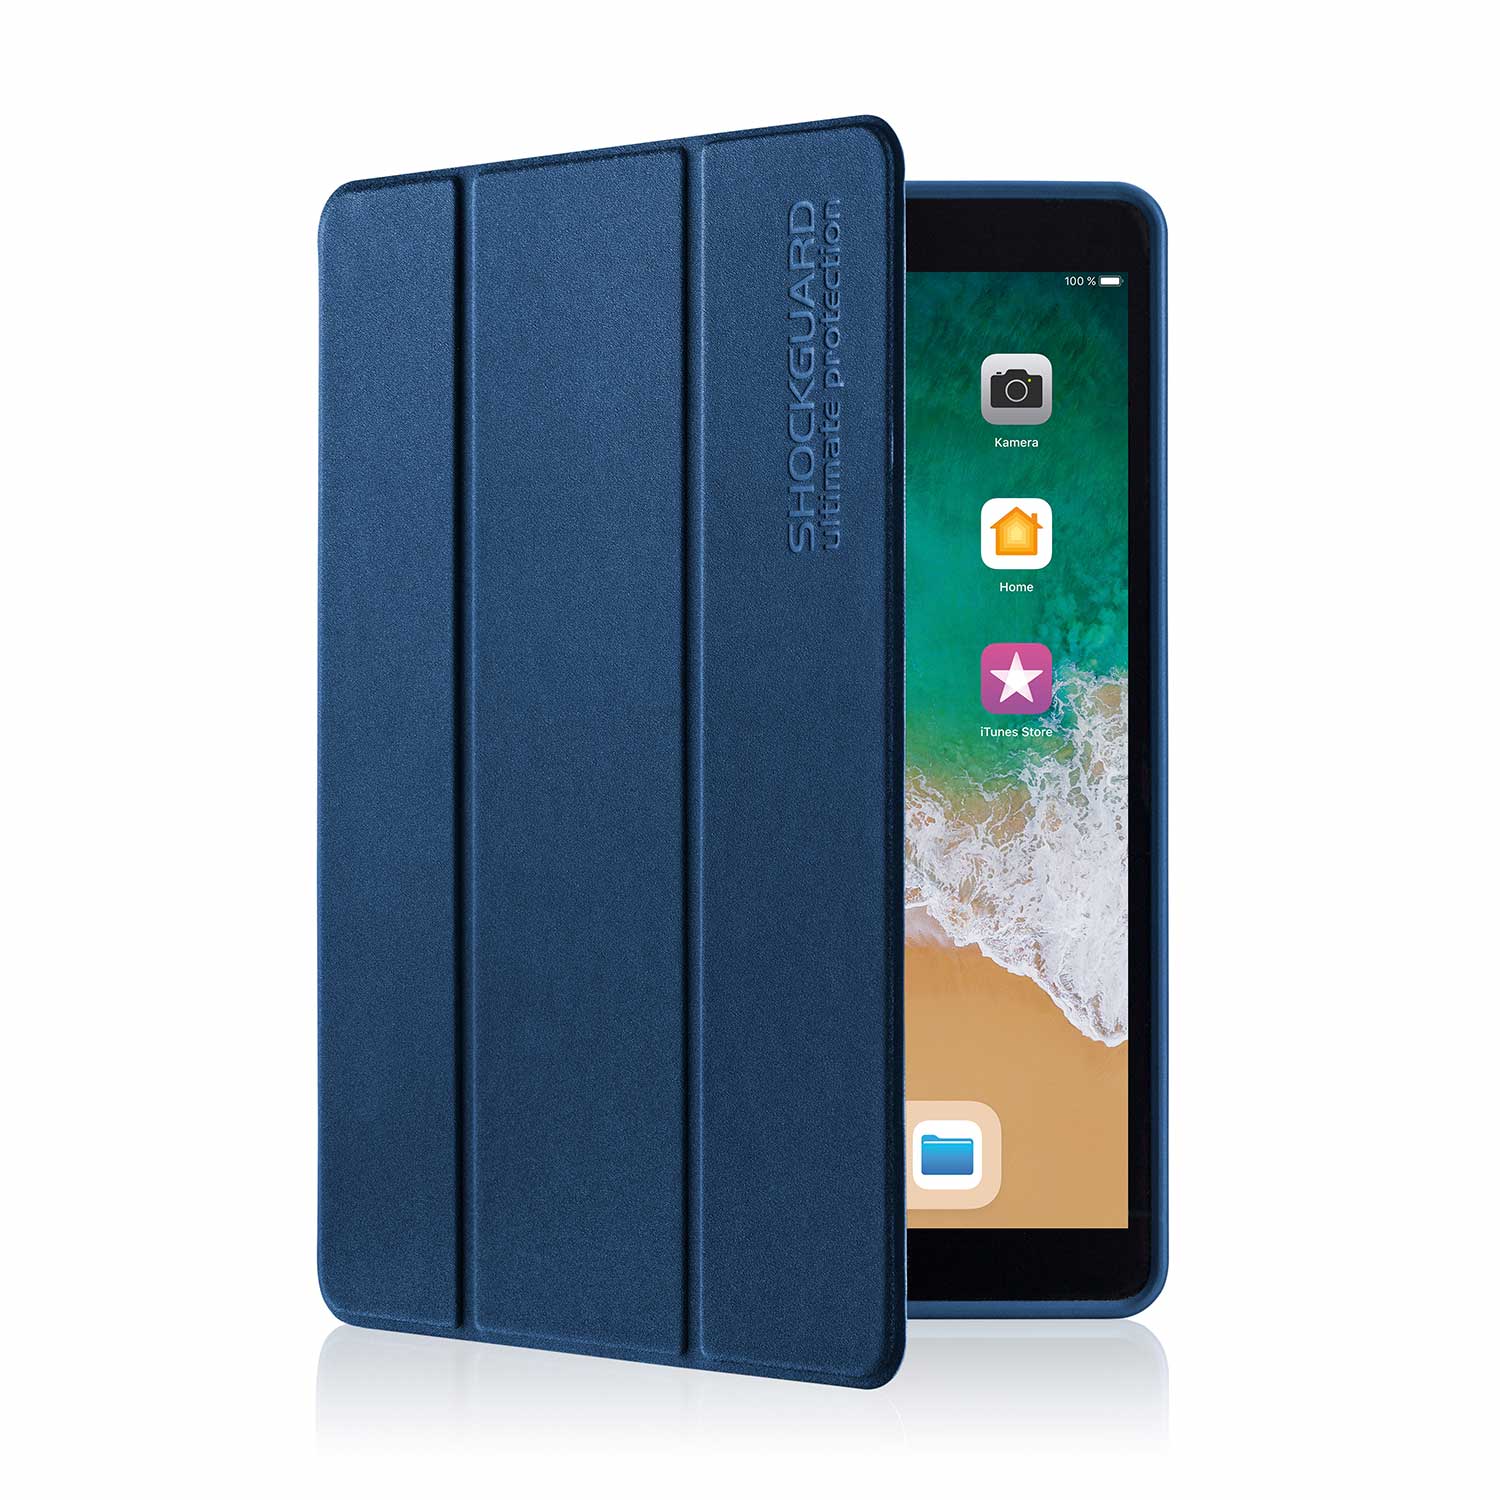 SHOCKGUARD SLIM / PEN iPad 10.2 Folio Case blau EDU 